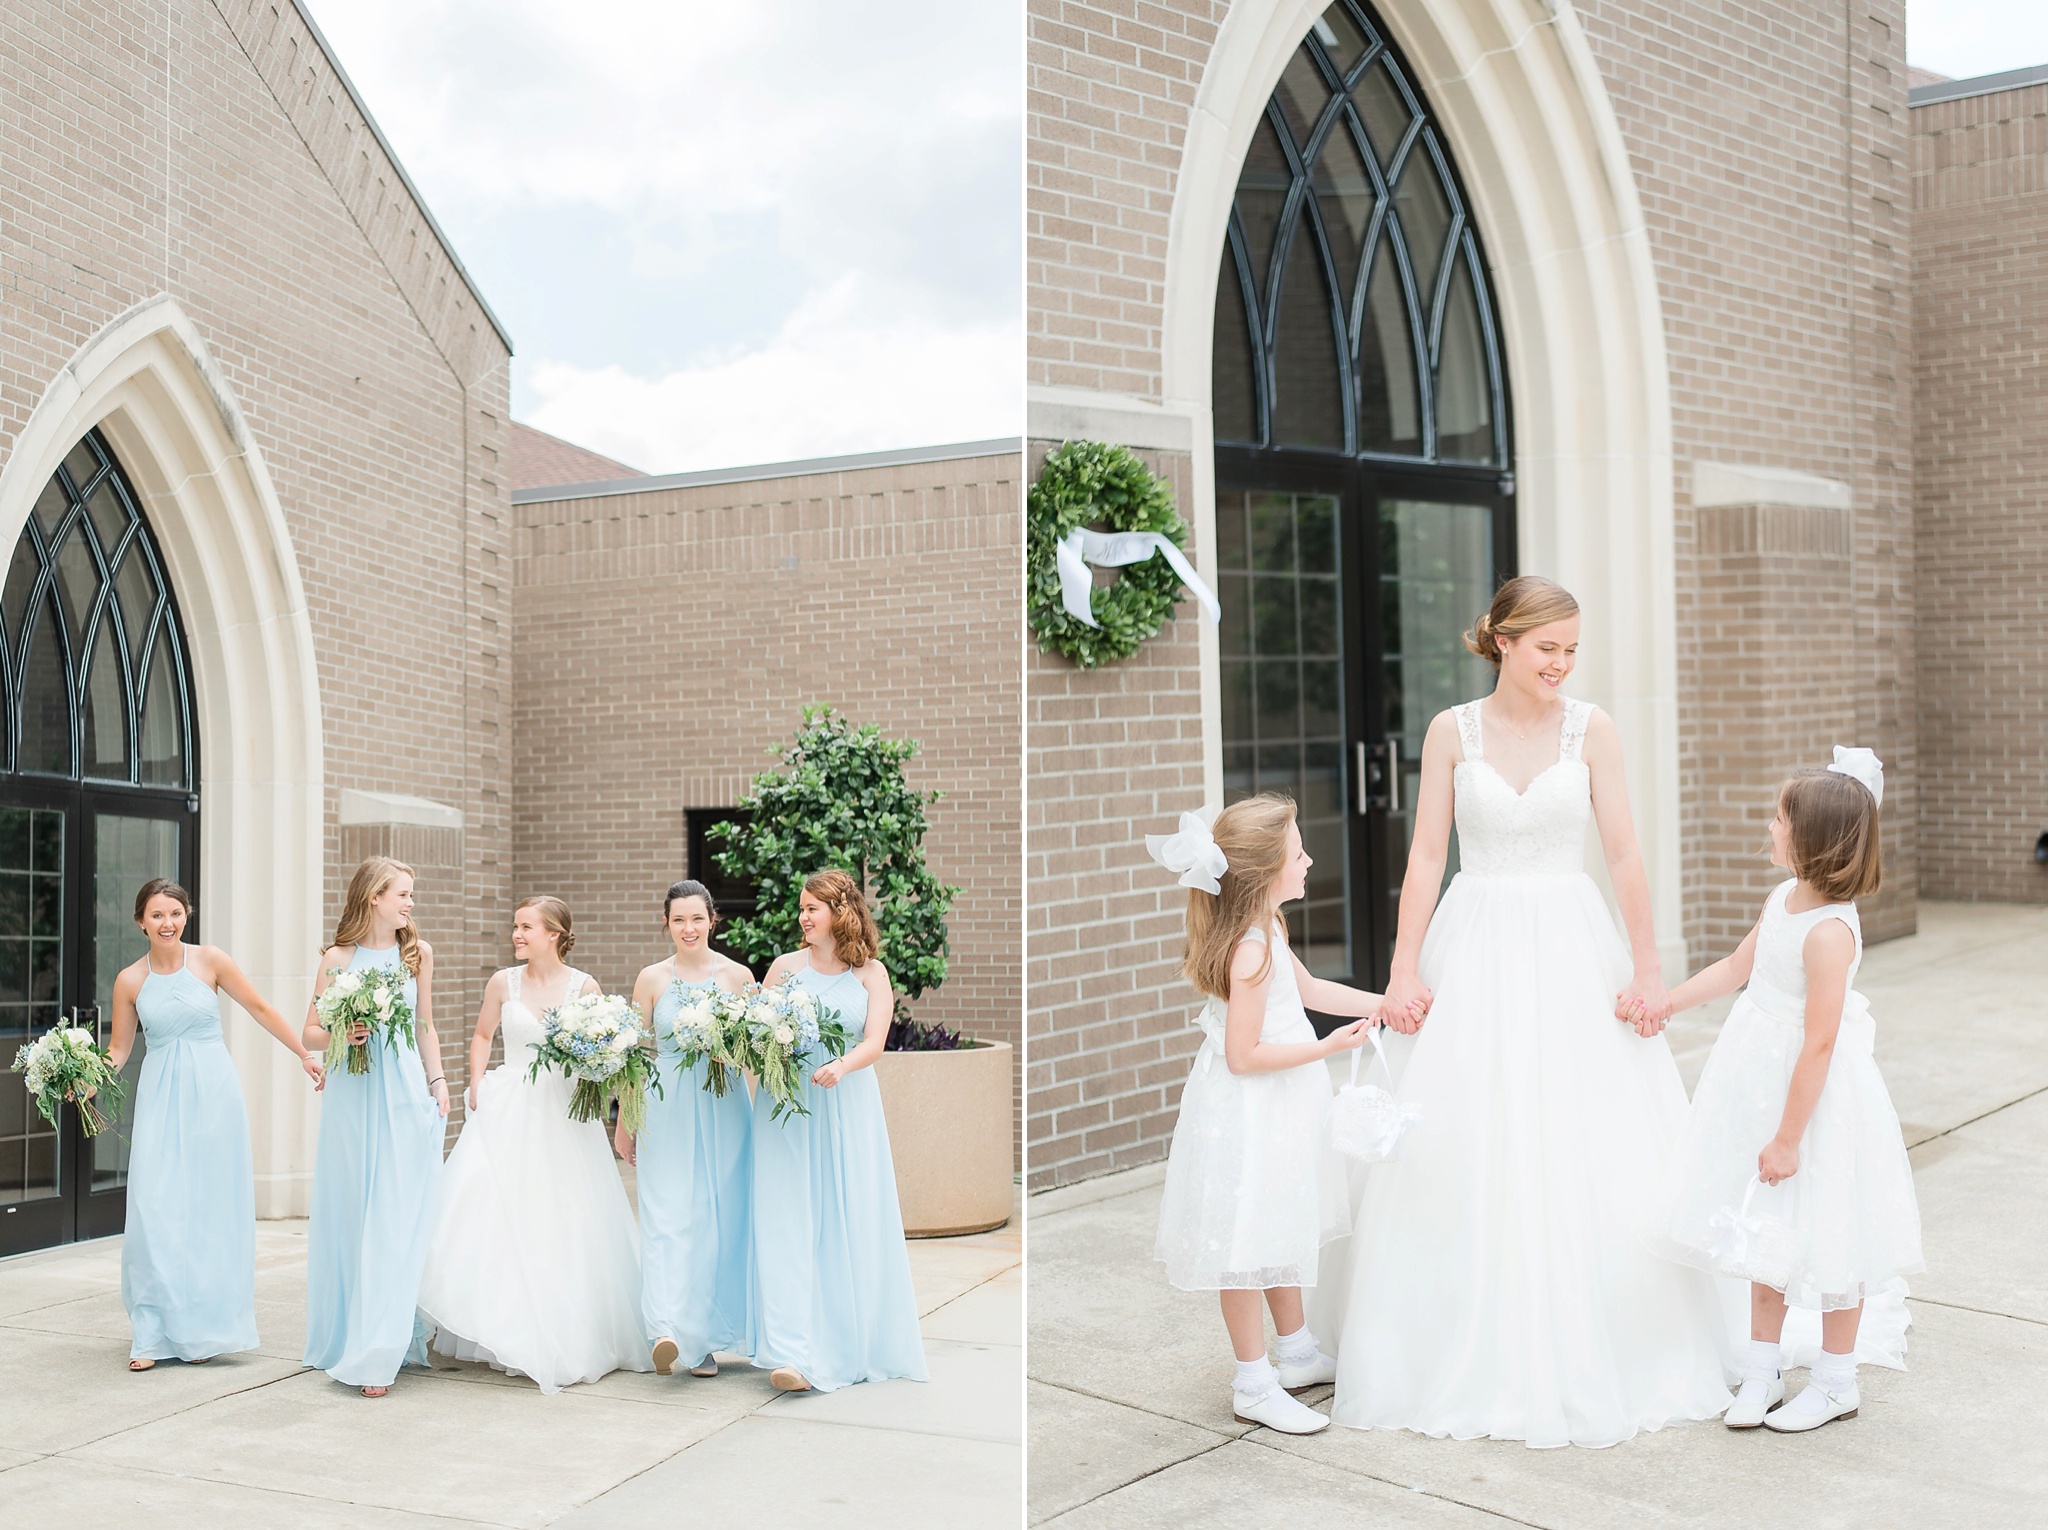 Aldridge Gardens Riverchase United Methodist Hoover Wedding | Birmingham Alabama Wedding Photographer_0042.jpg